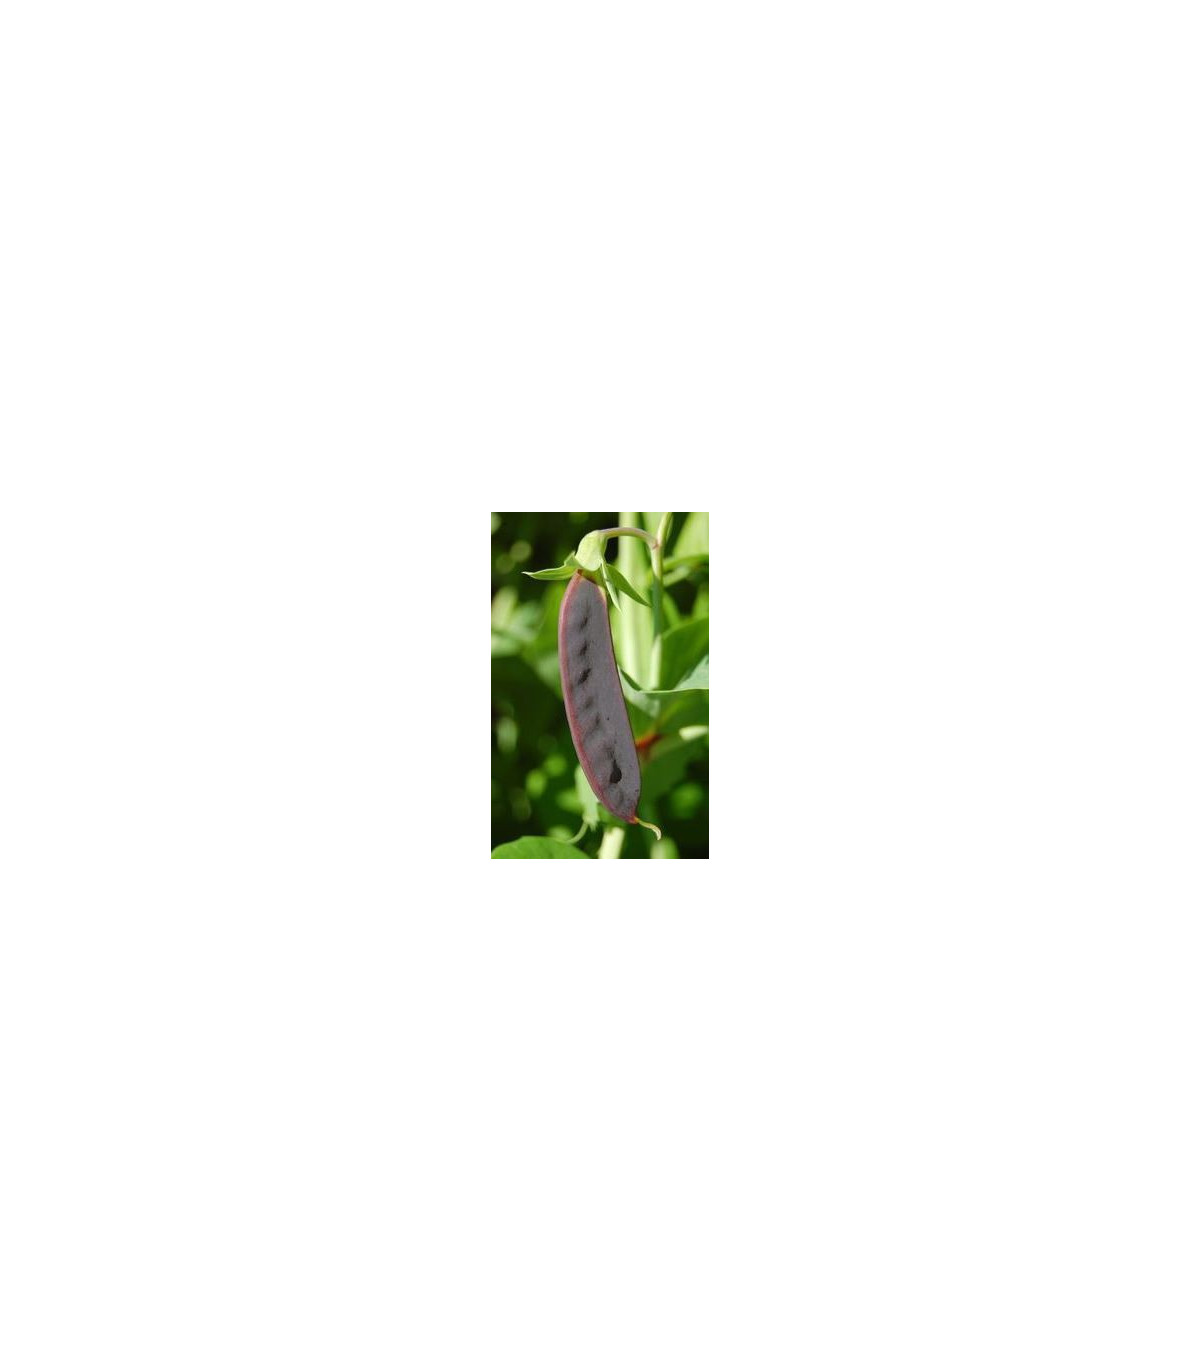 Semínka hrachu - Pisum sativum - Hrách cukrový pestrobarevný -  prodej semen - 8 g